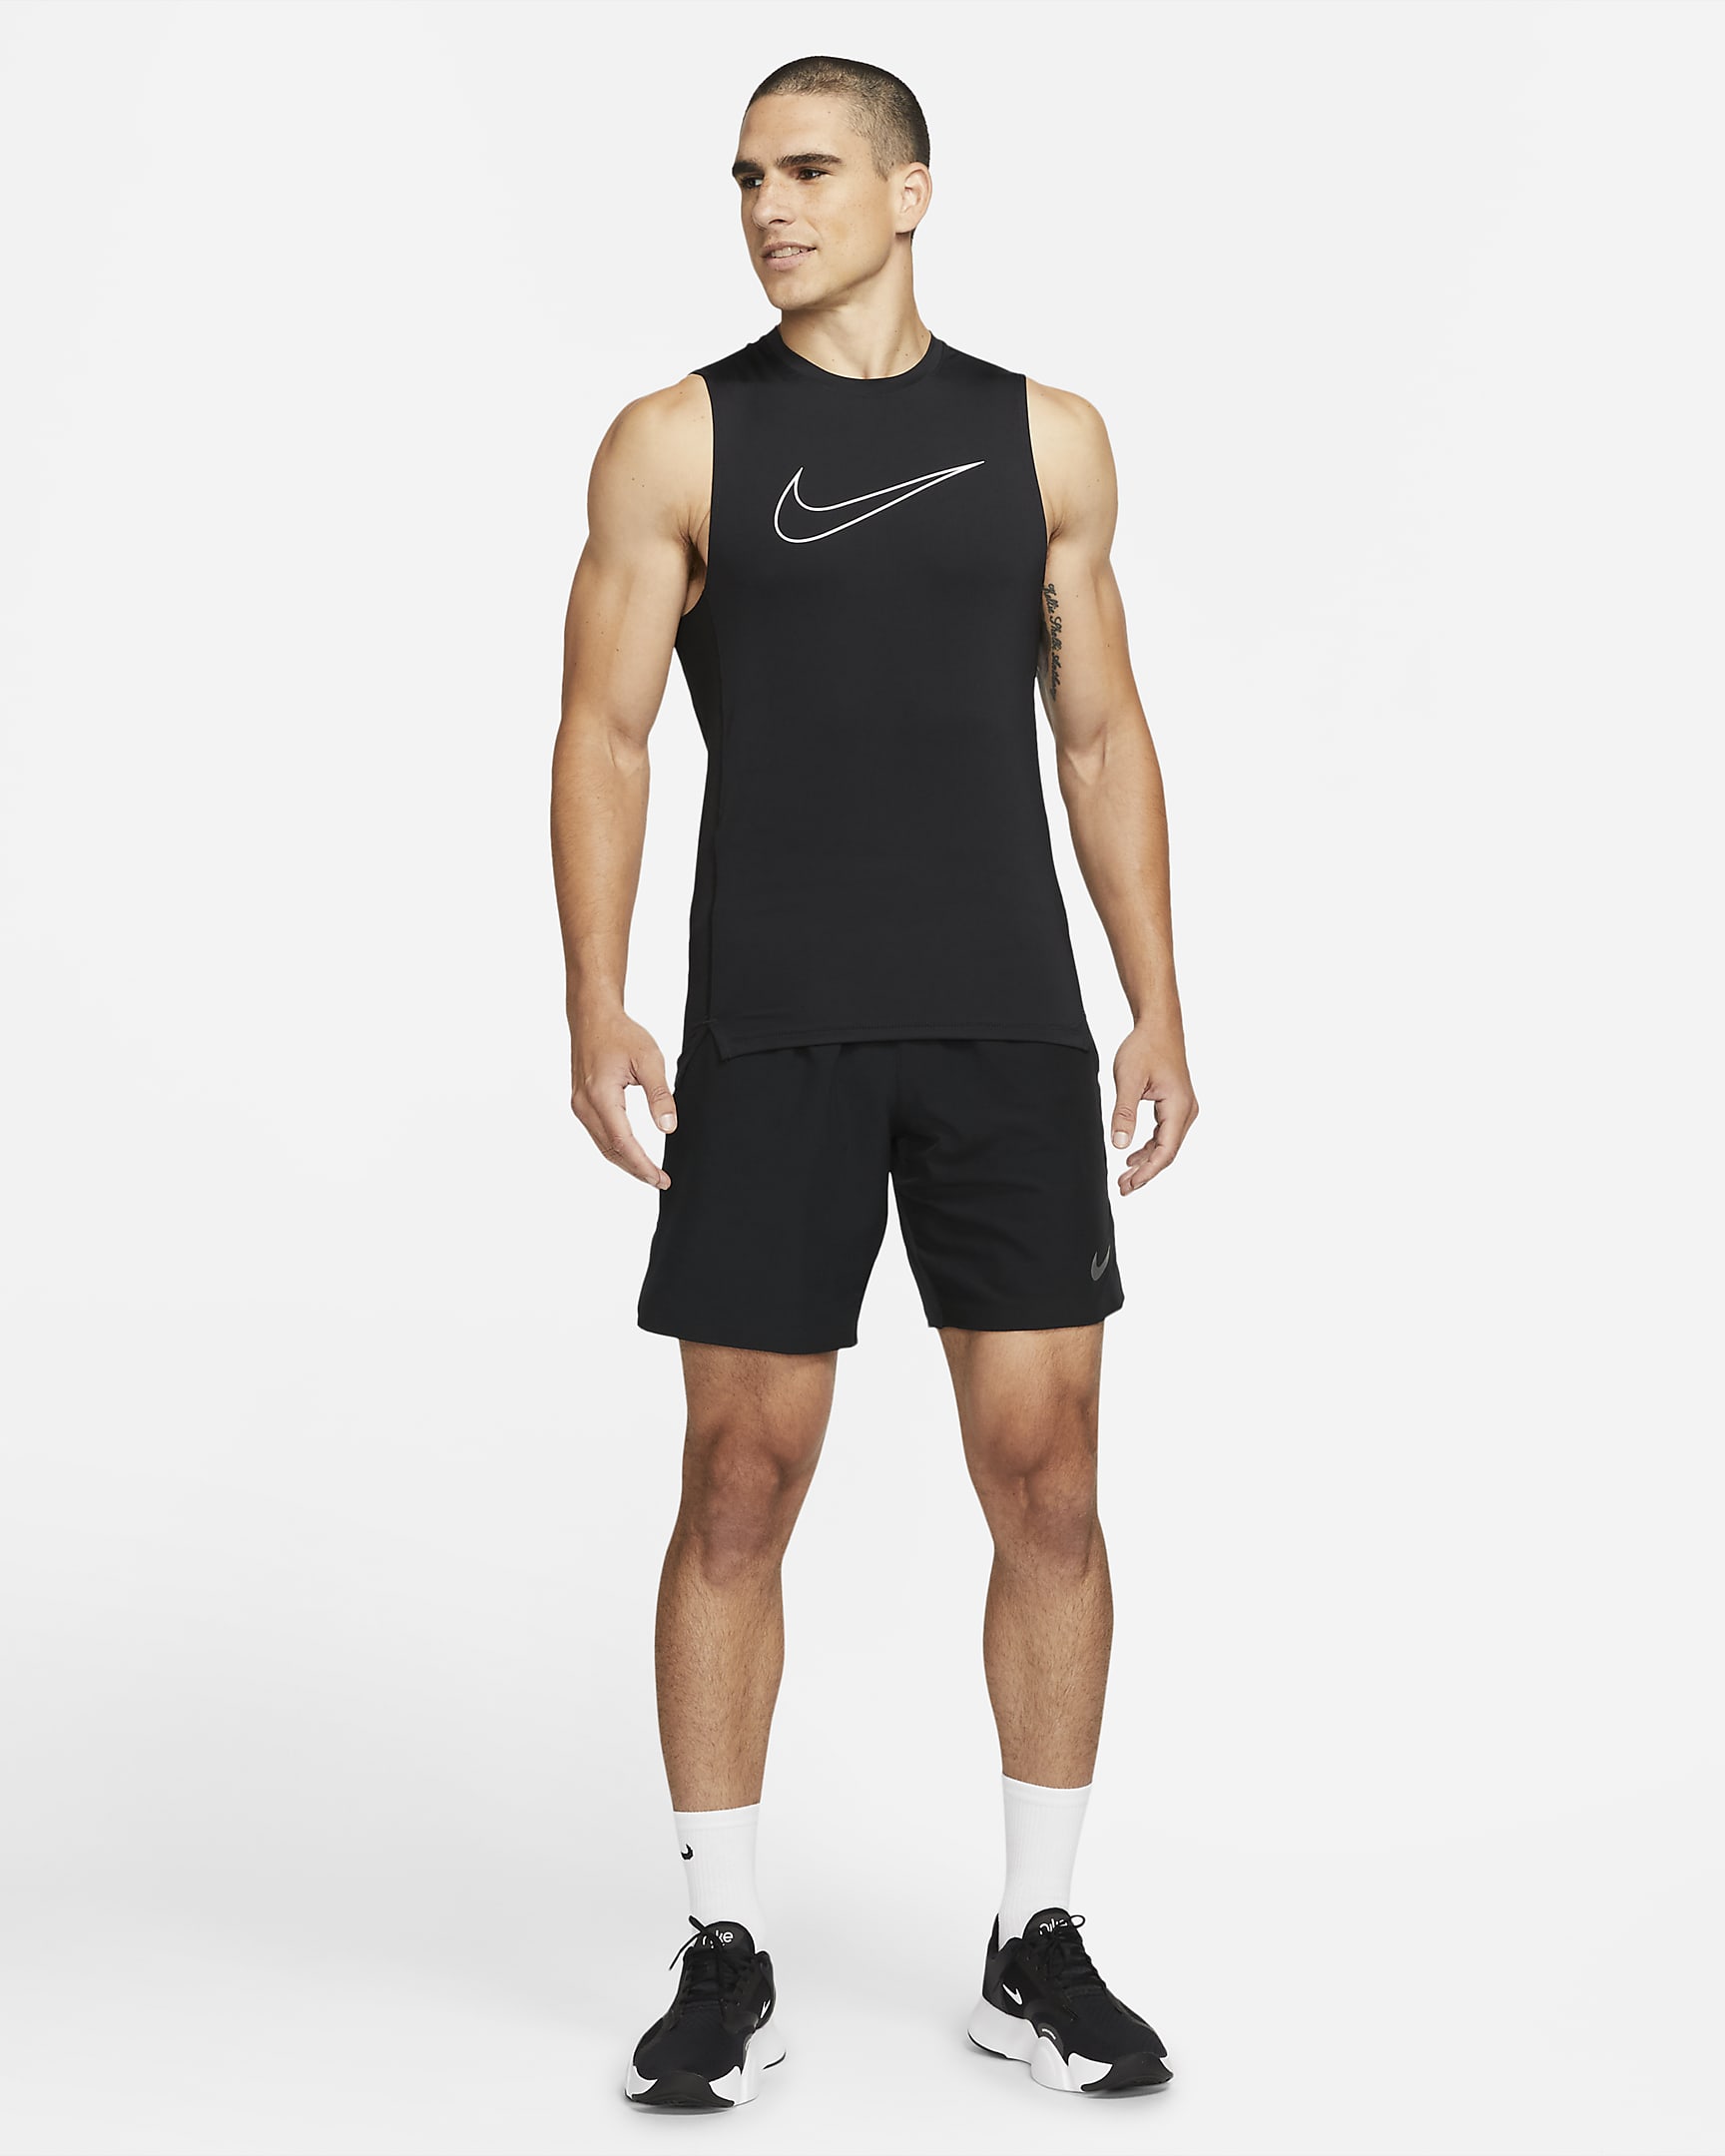 Camiseta sinmangas y ajuste slim para hombre Nike Pro Dri-FIT. Nike.com